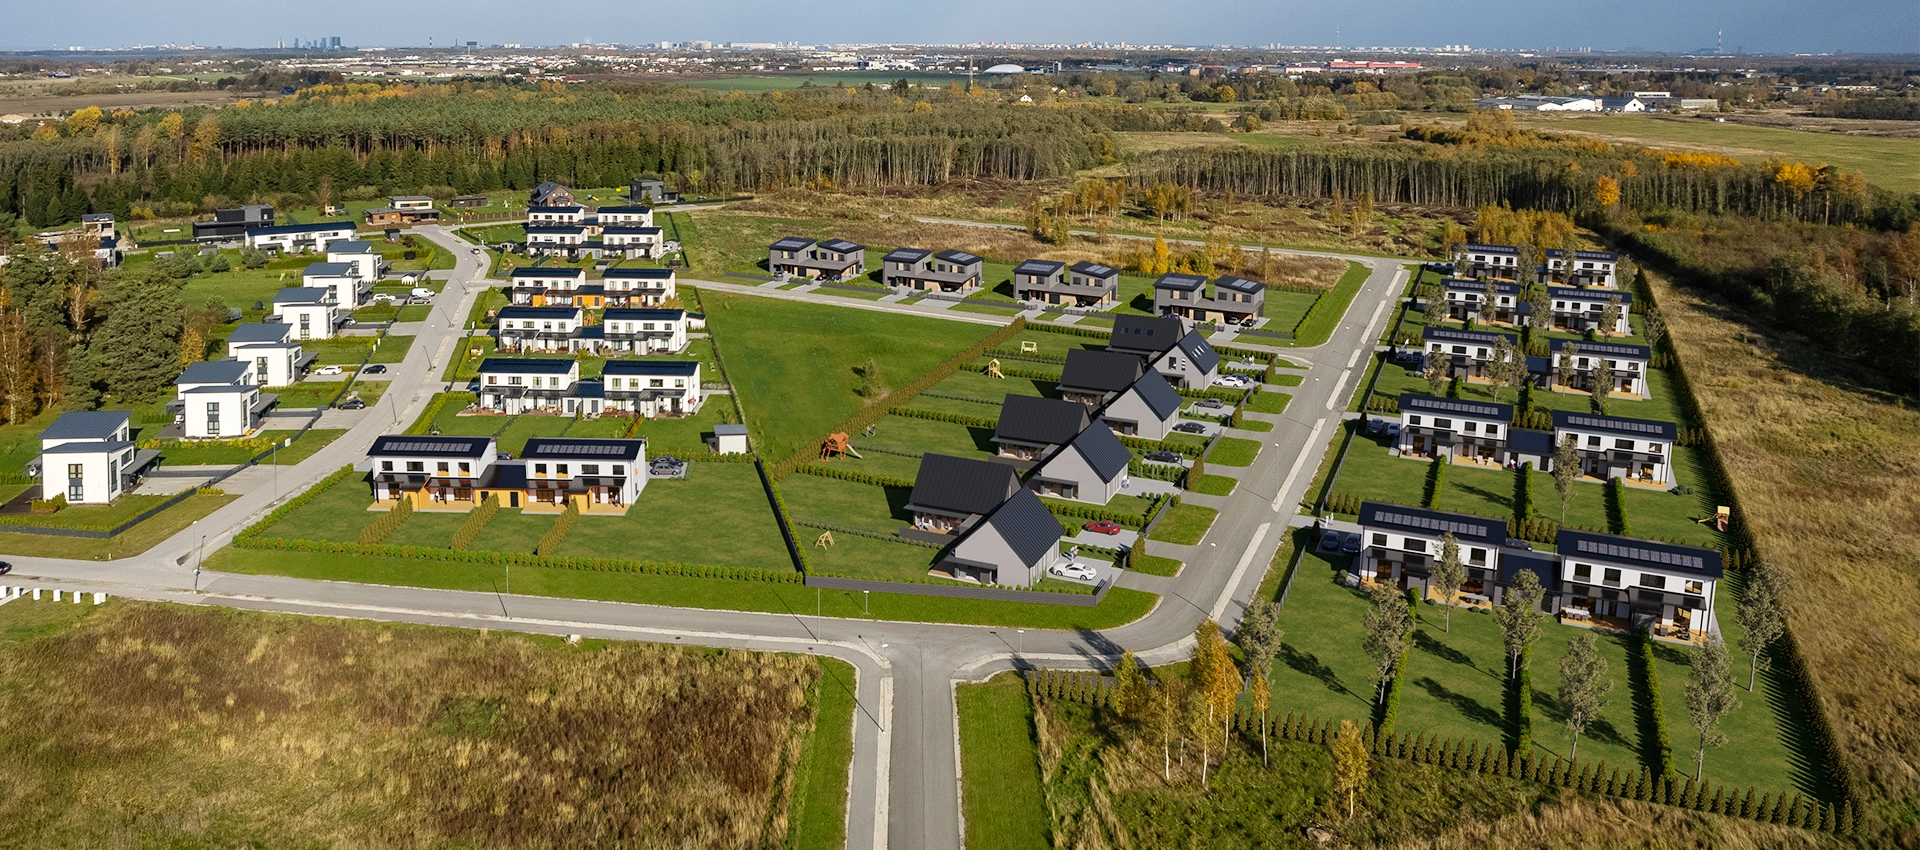 Residential area Uuesalu in Estonia